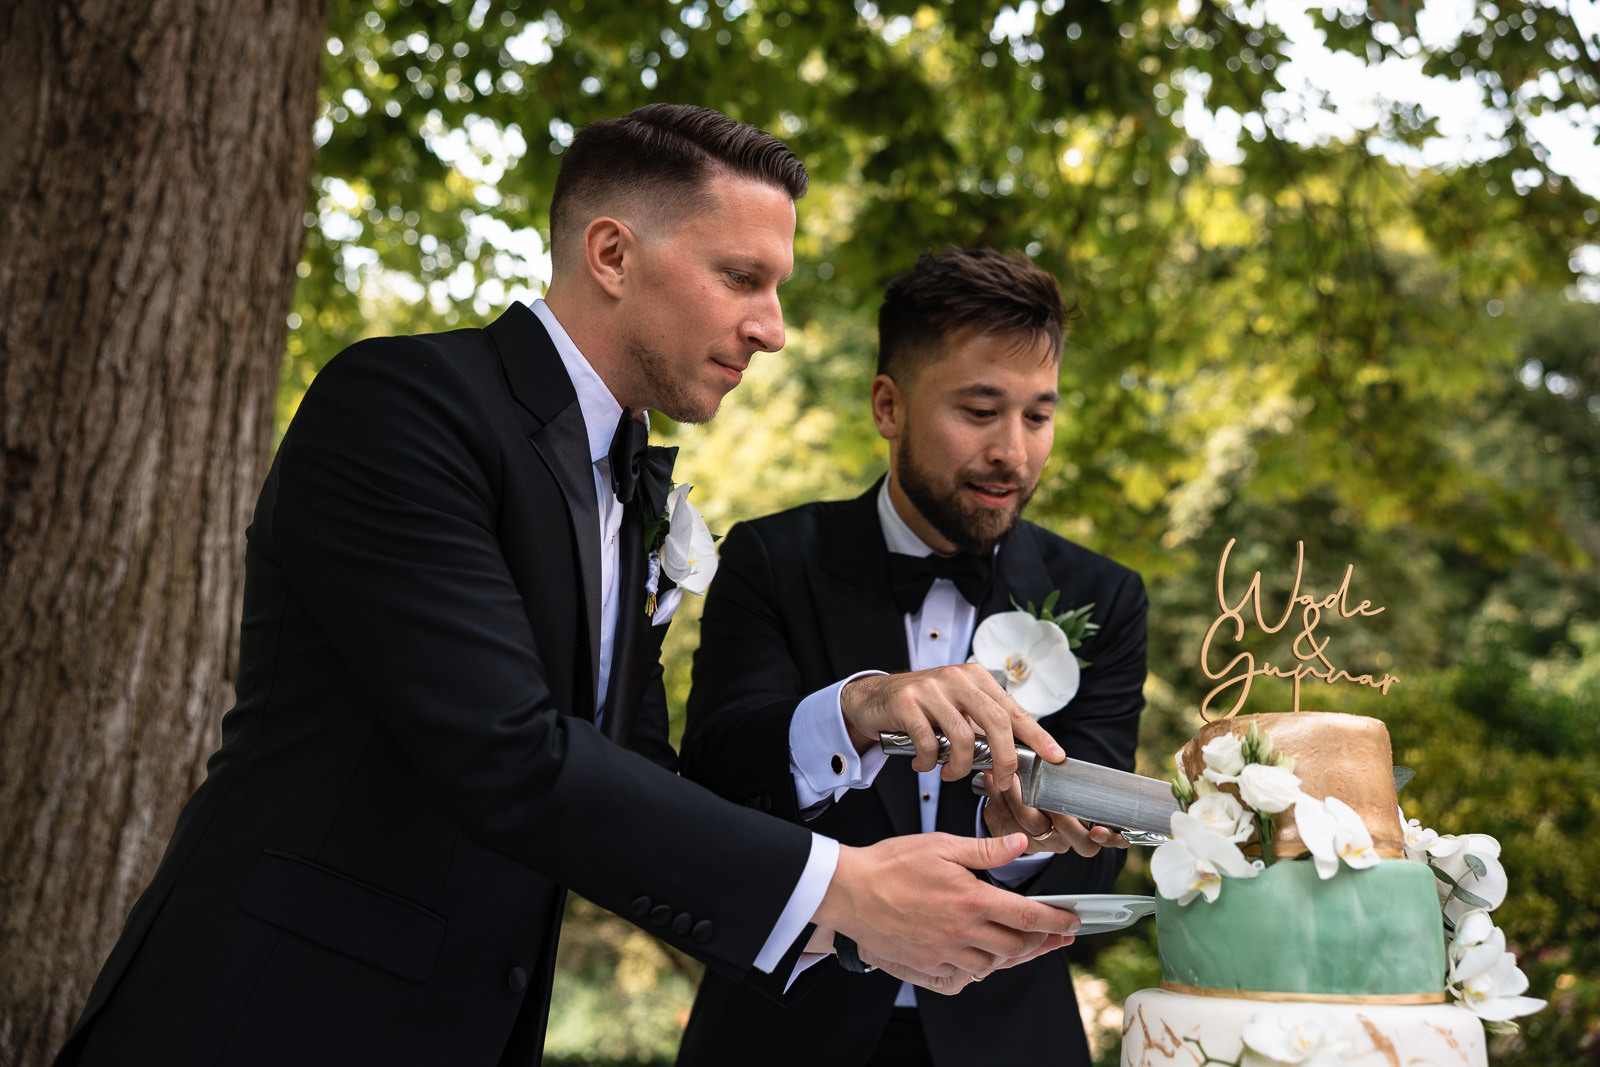 Two grooms cutting cake